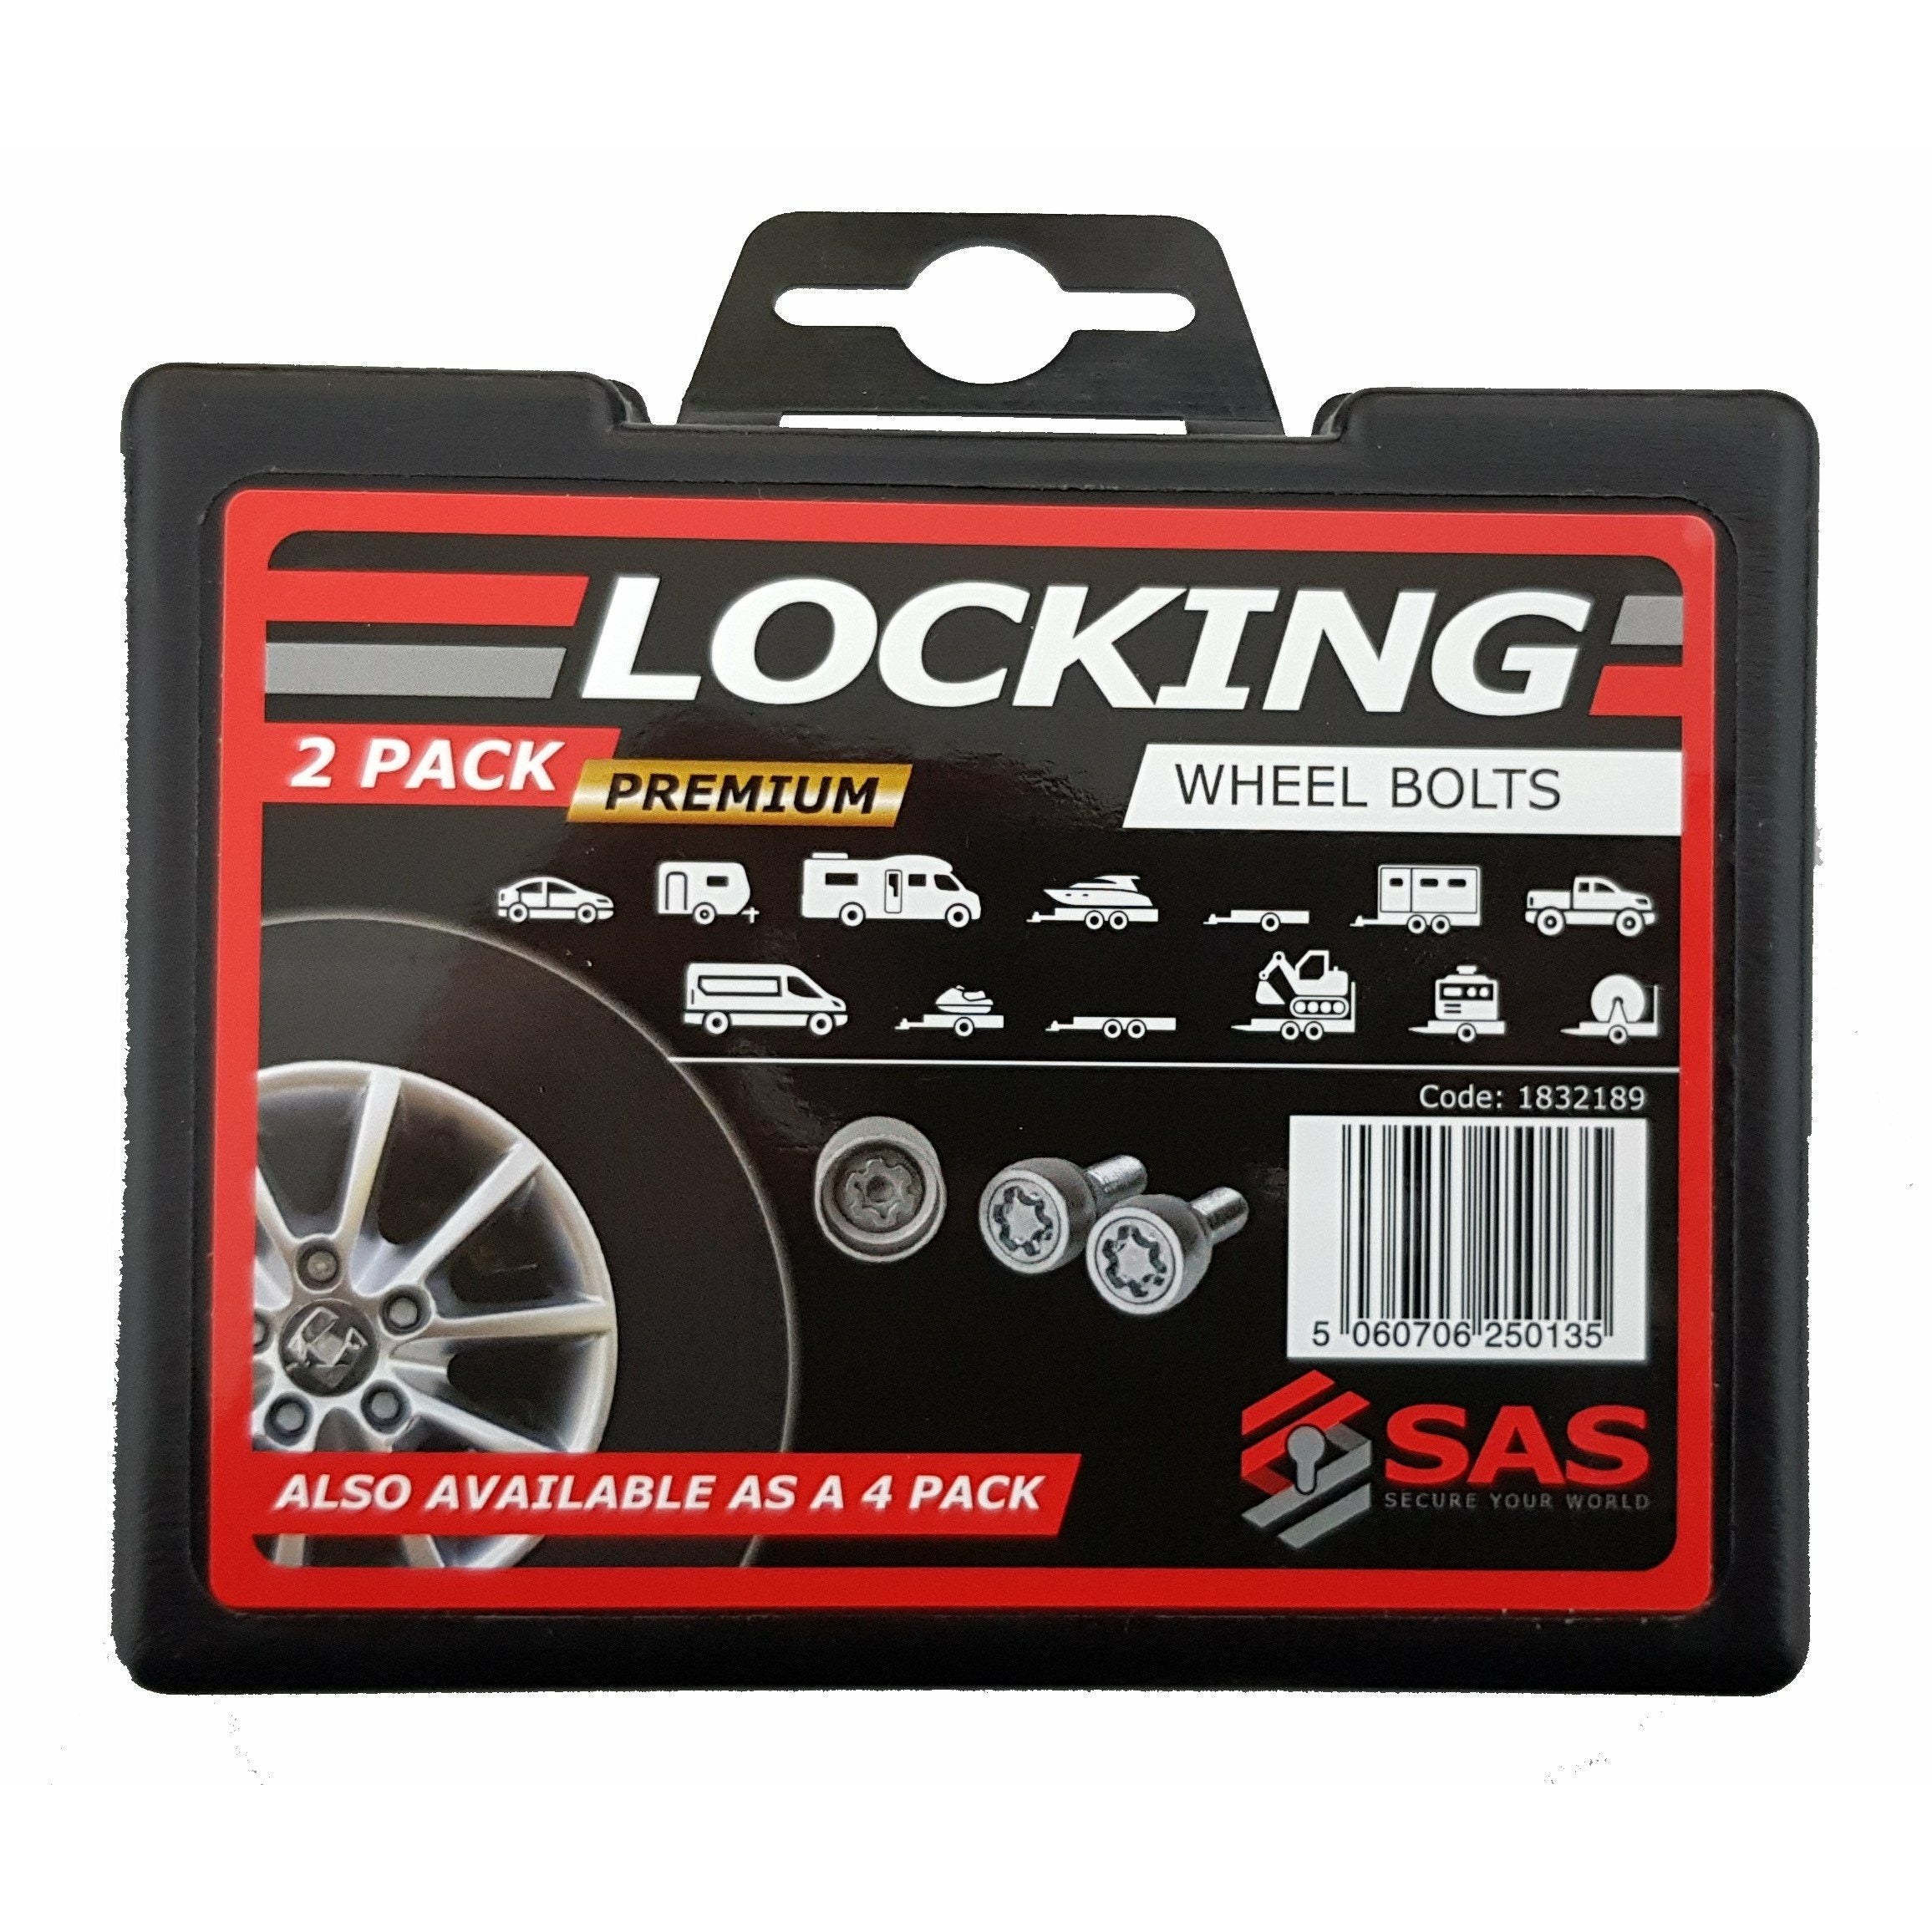 SAS Premium Locking Wheel Bolts – 2 Pack